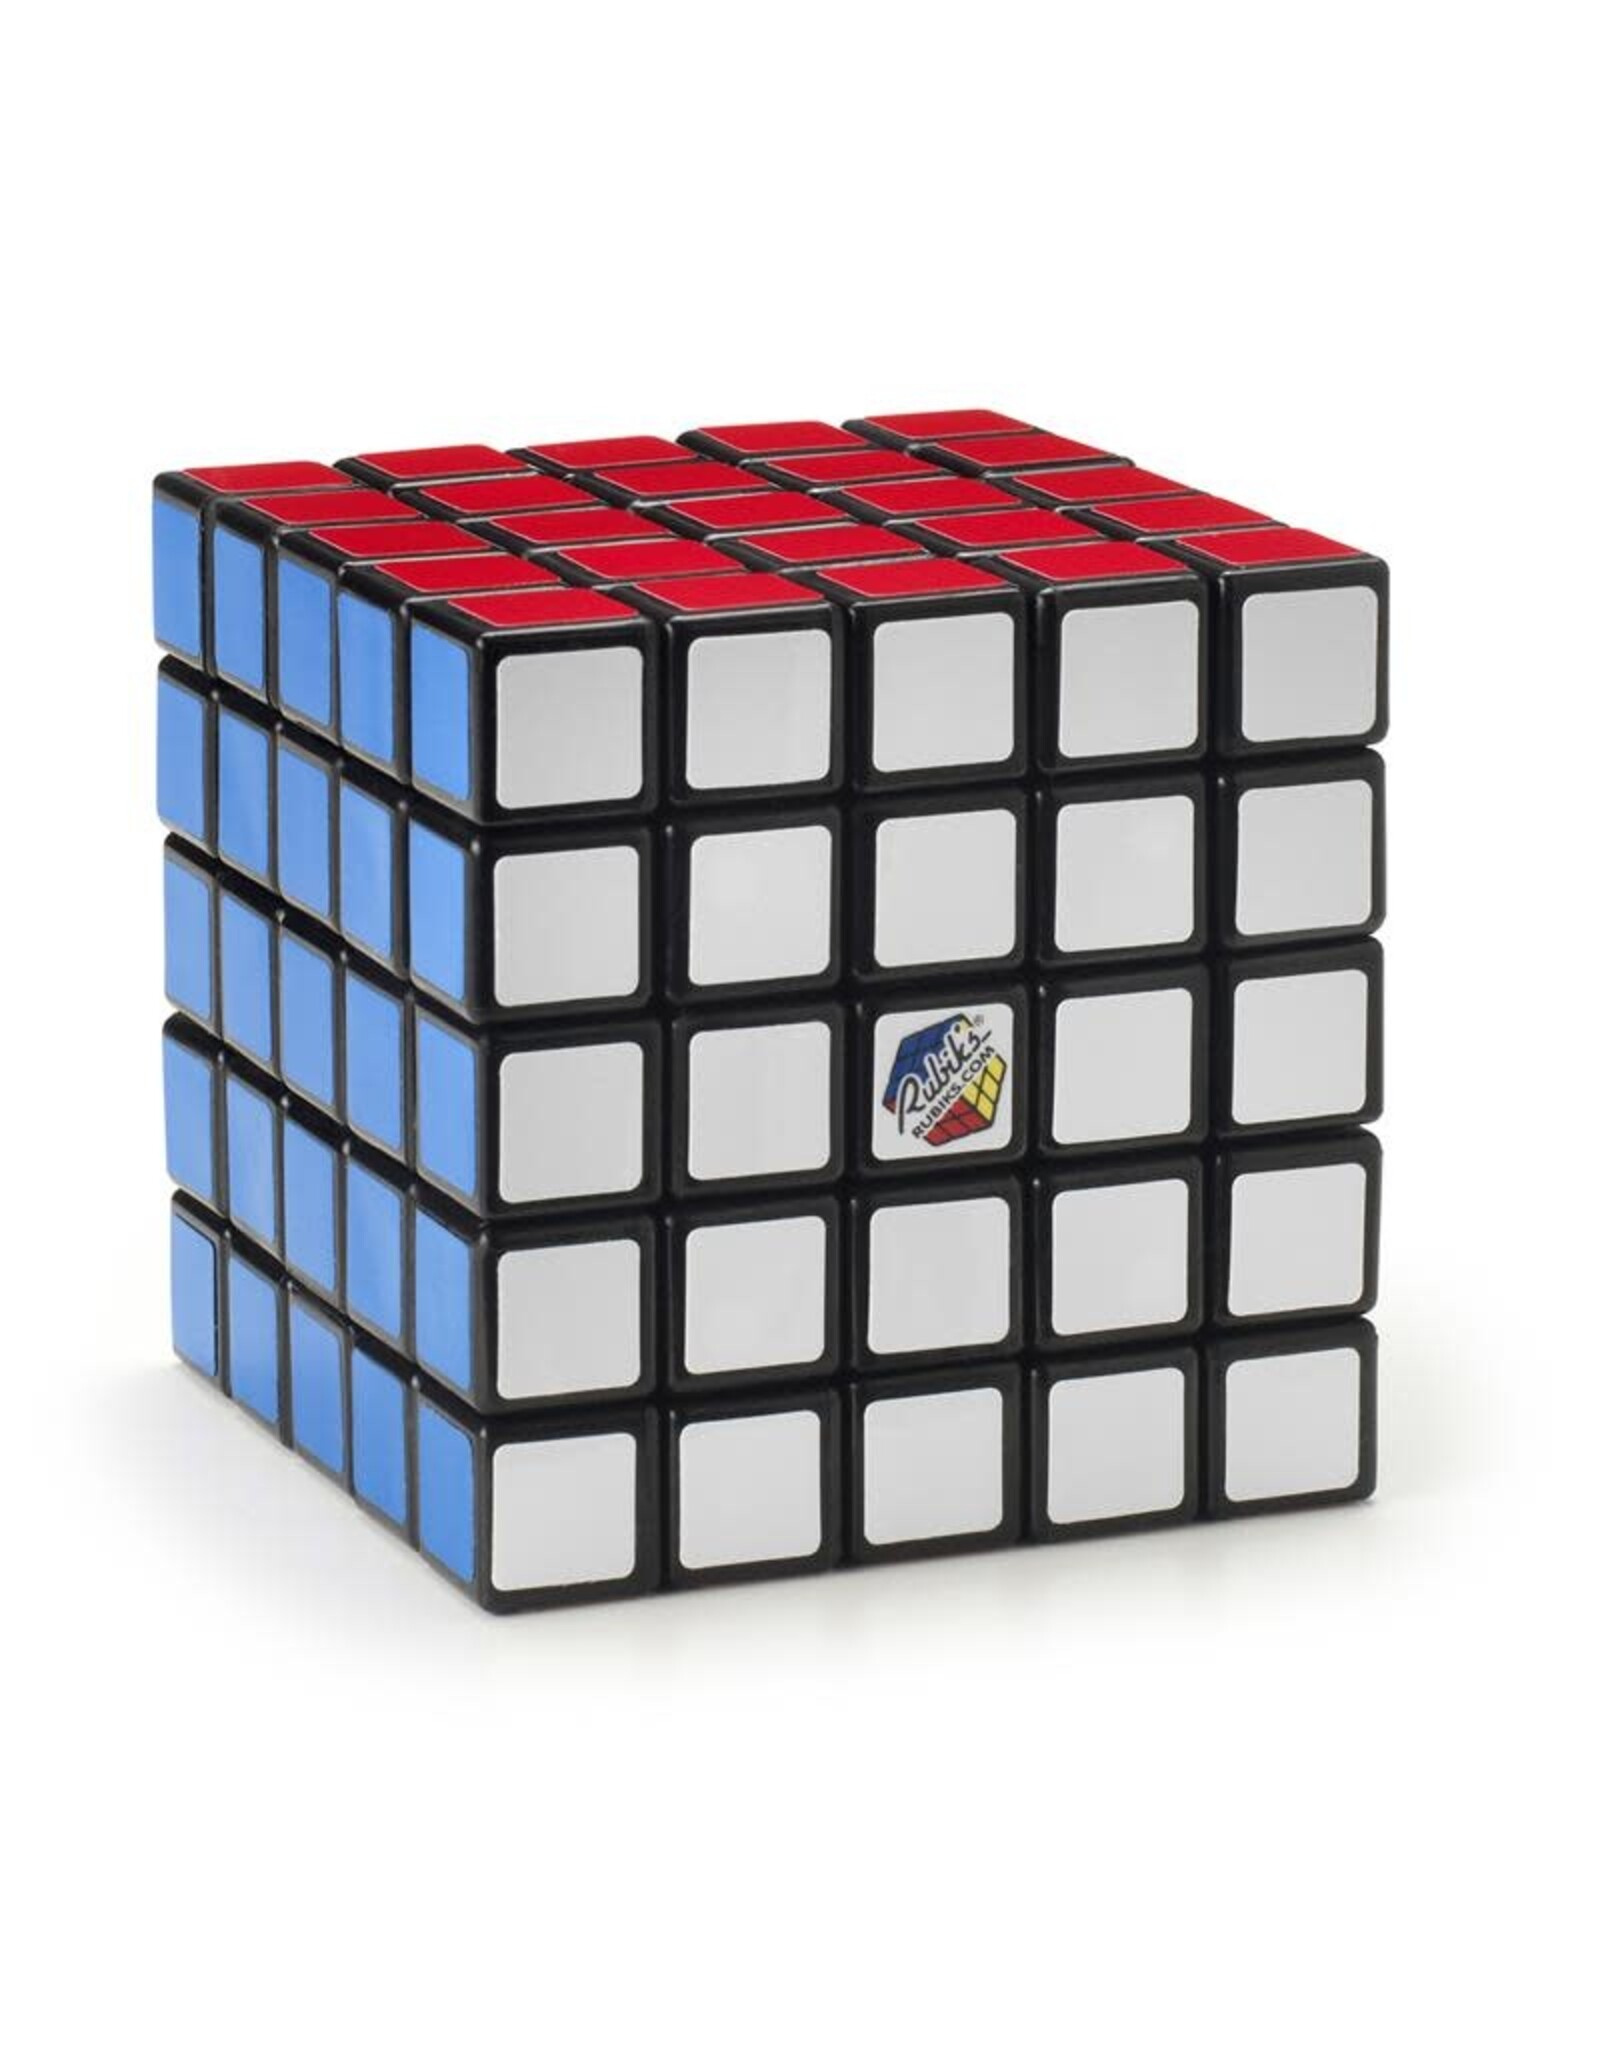 Gund/Spinmaster RBK COR Rubiks 5x5 Professor